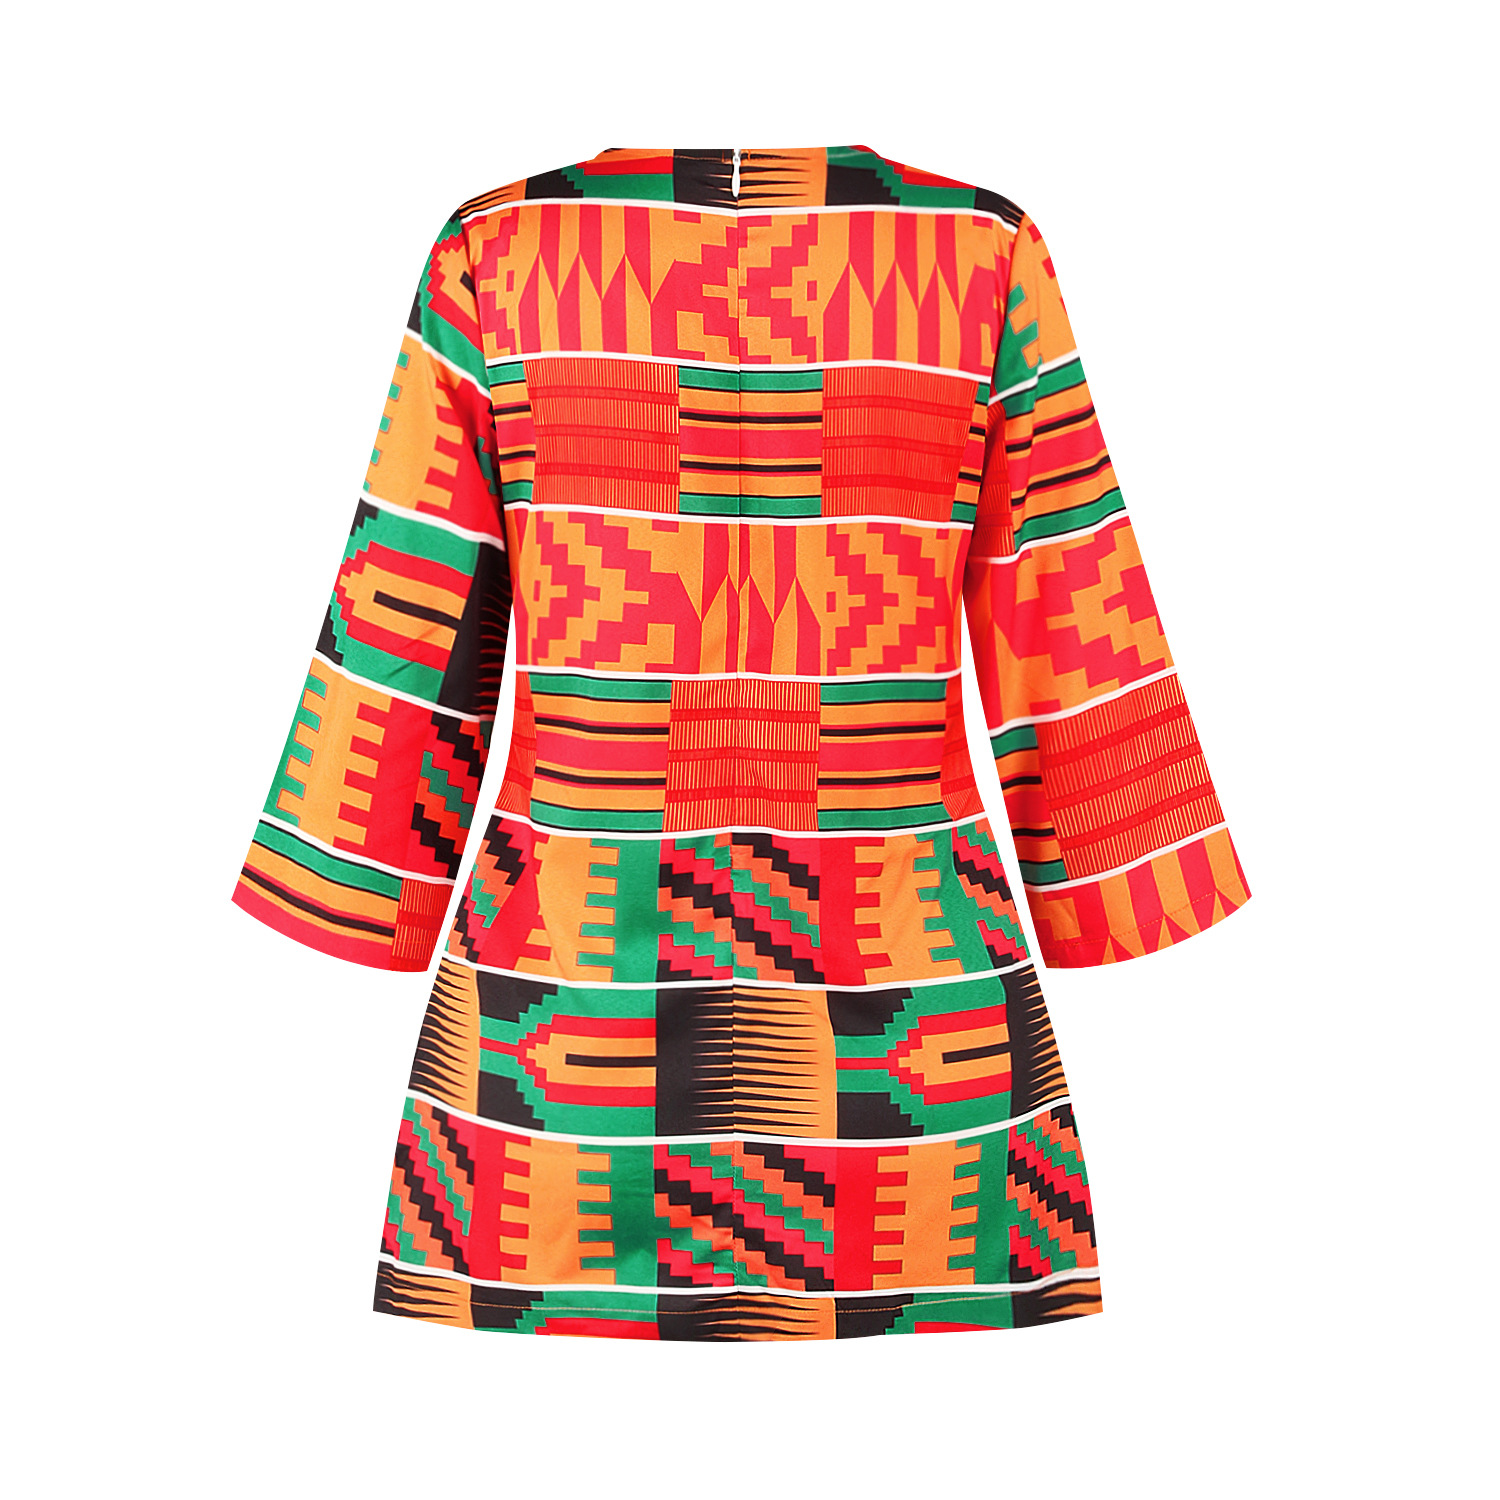 FSCC Women's Boho African Print 3/4 Sleeve Tops Loose Tunic Round Neck Dashiki Ankara Shirt Blouse
